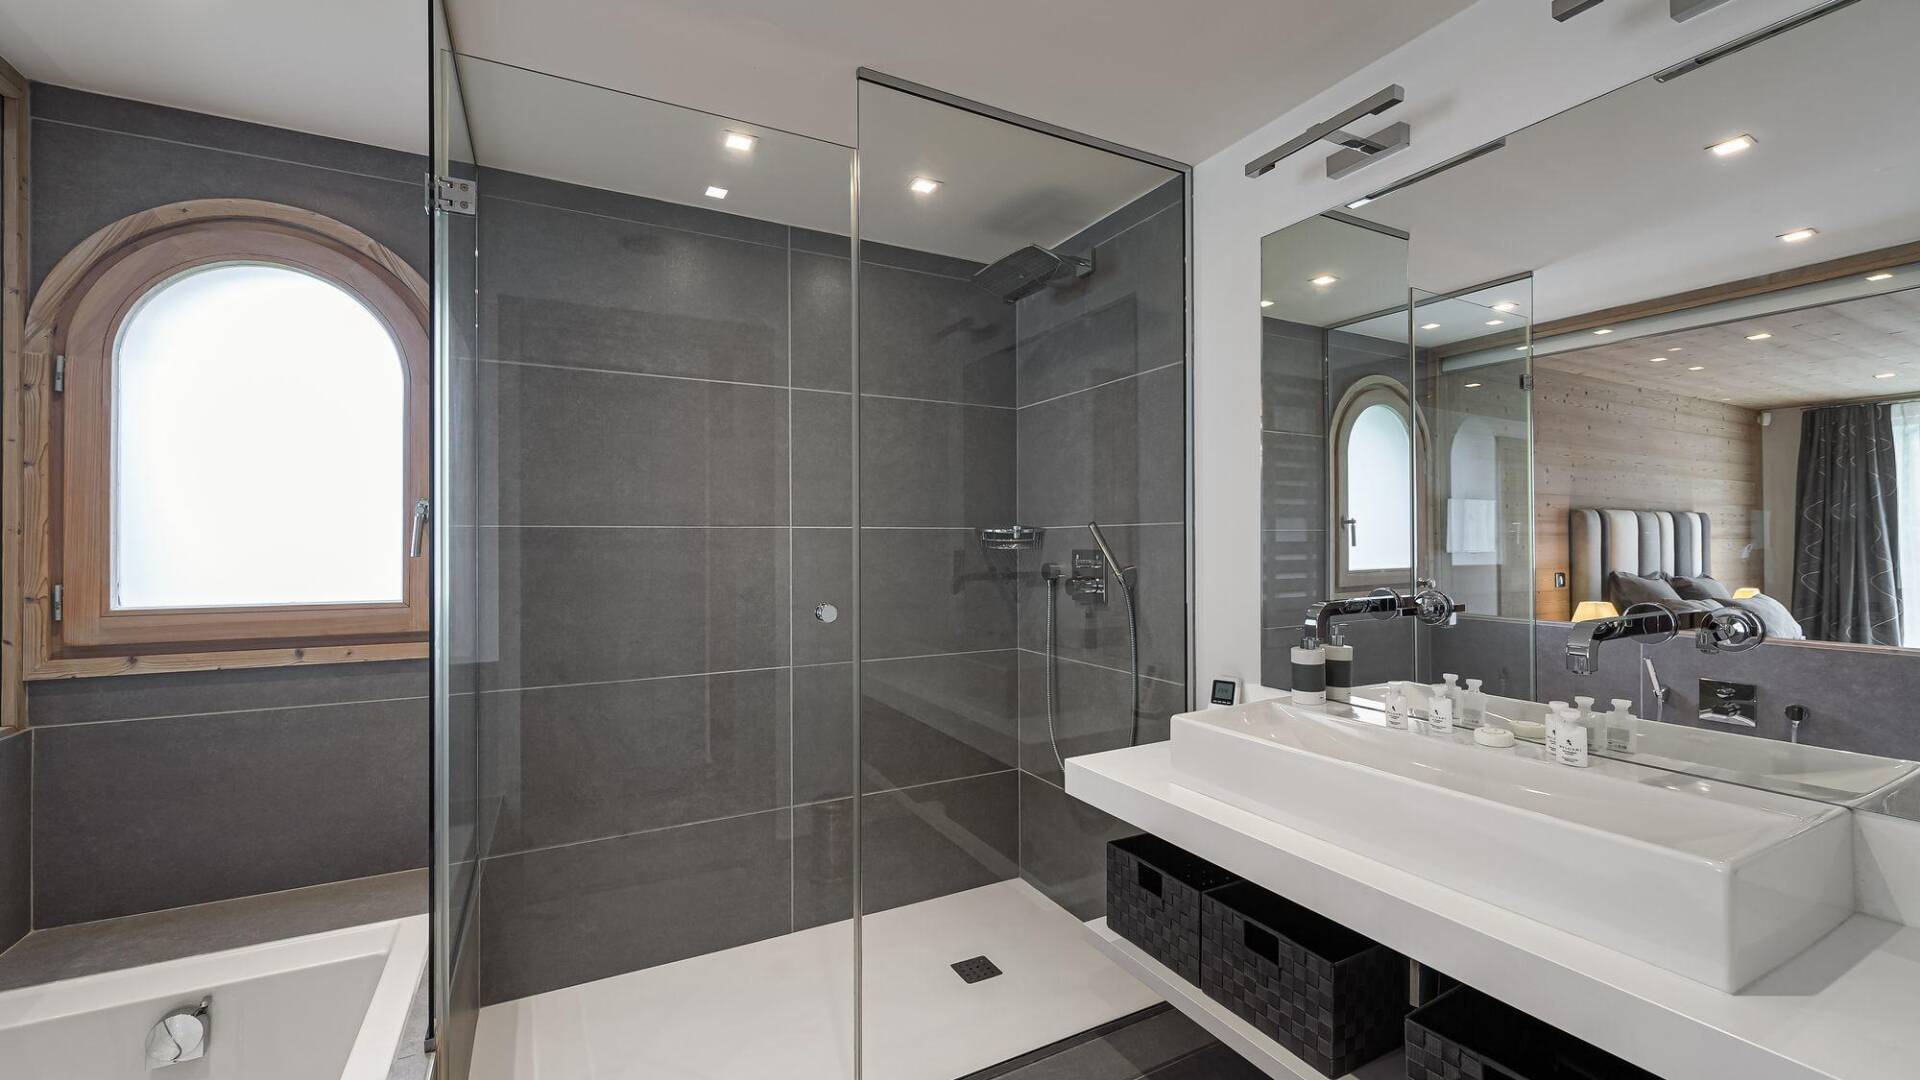 en suite bathroom with walk-in shower and bath tub